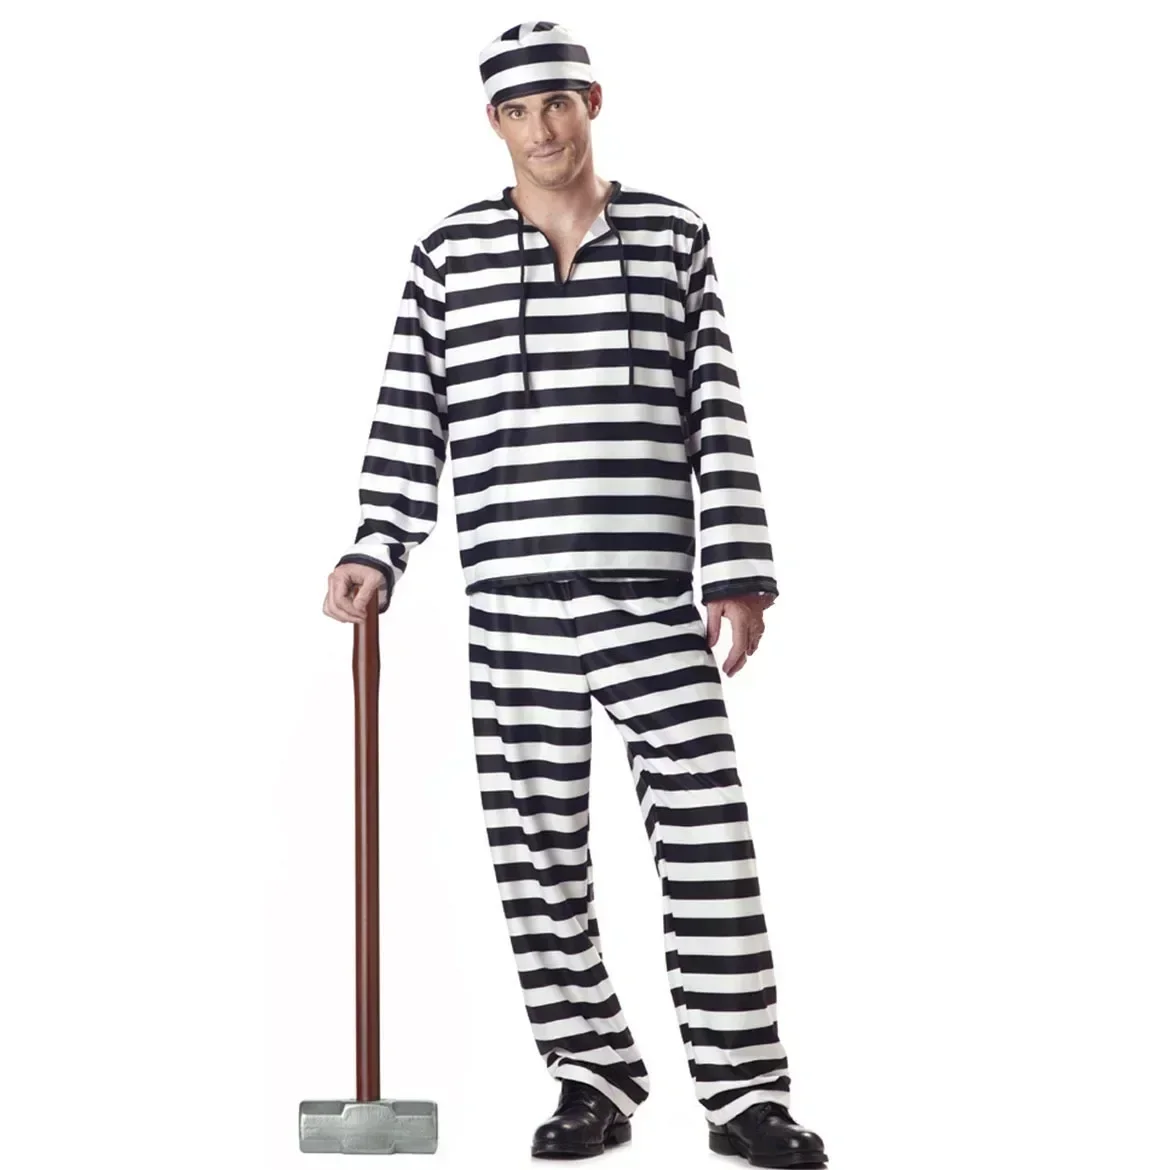 Костюм взрослого заключенного на Хэллоуин Пурим в черно-белую полоску, костюмы заключенных-заключенных для мужчин, женщин, пар